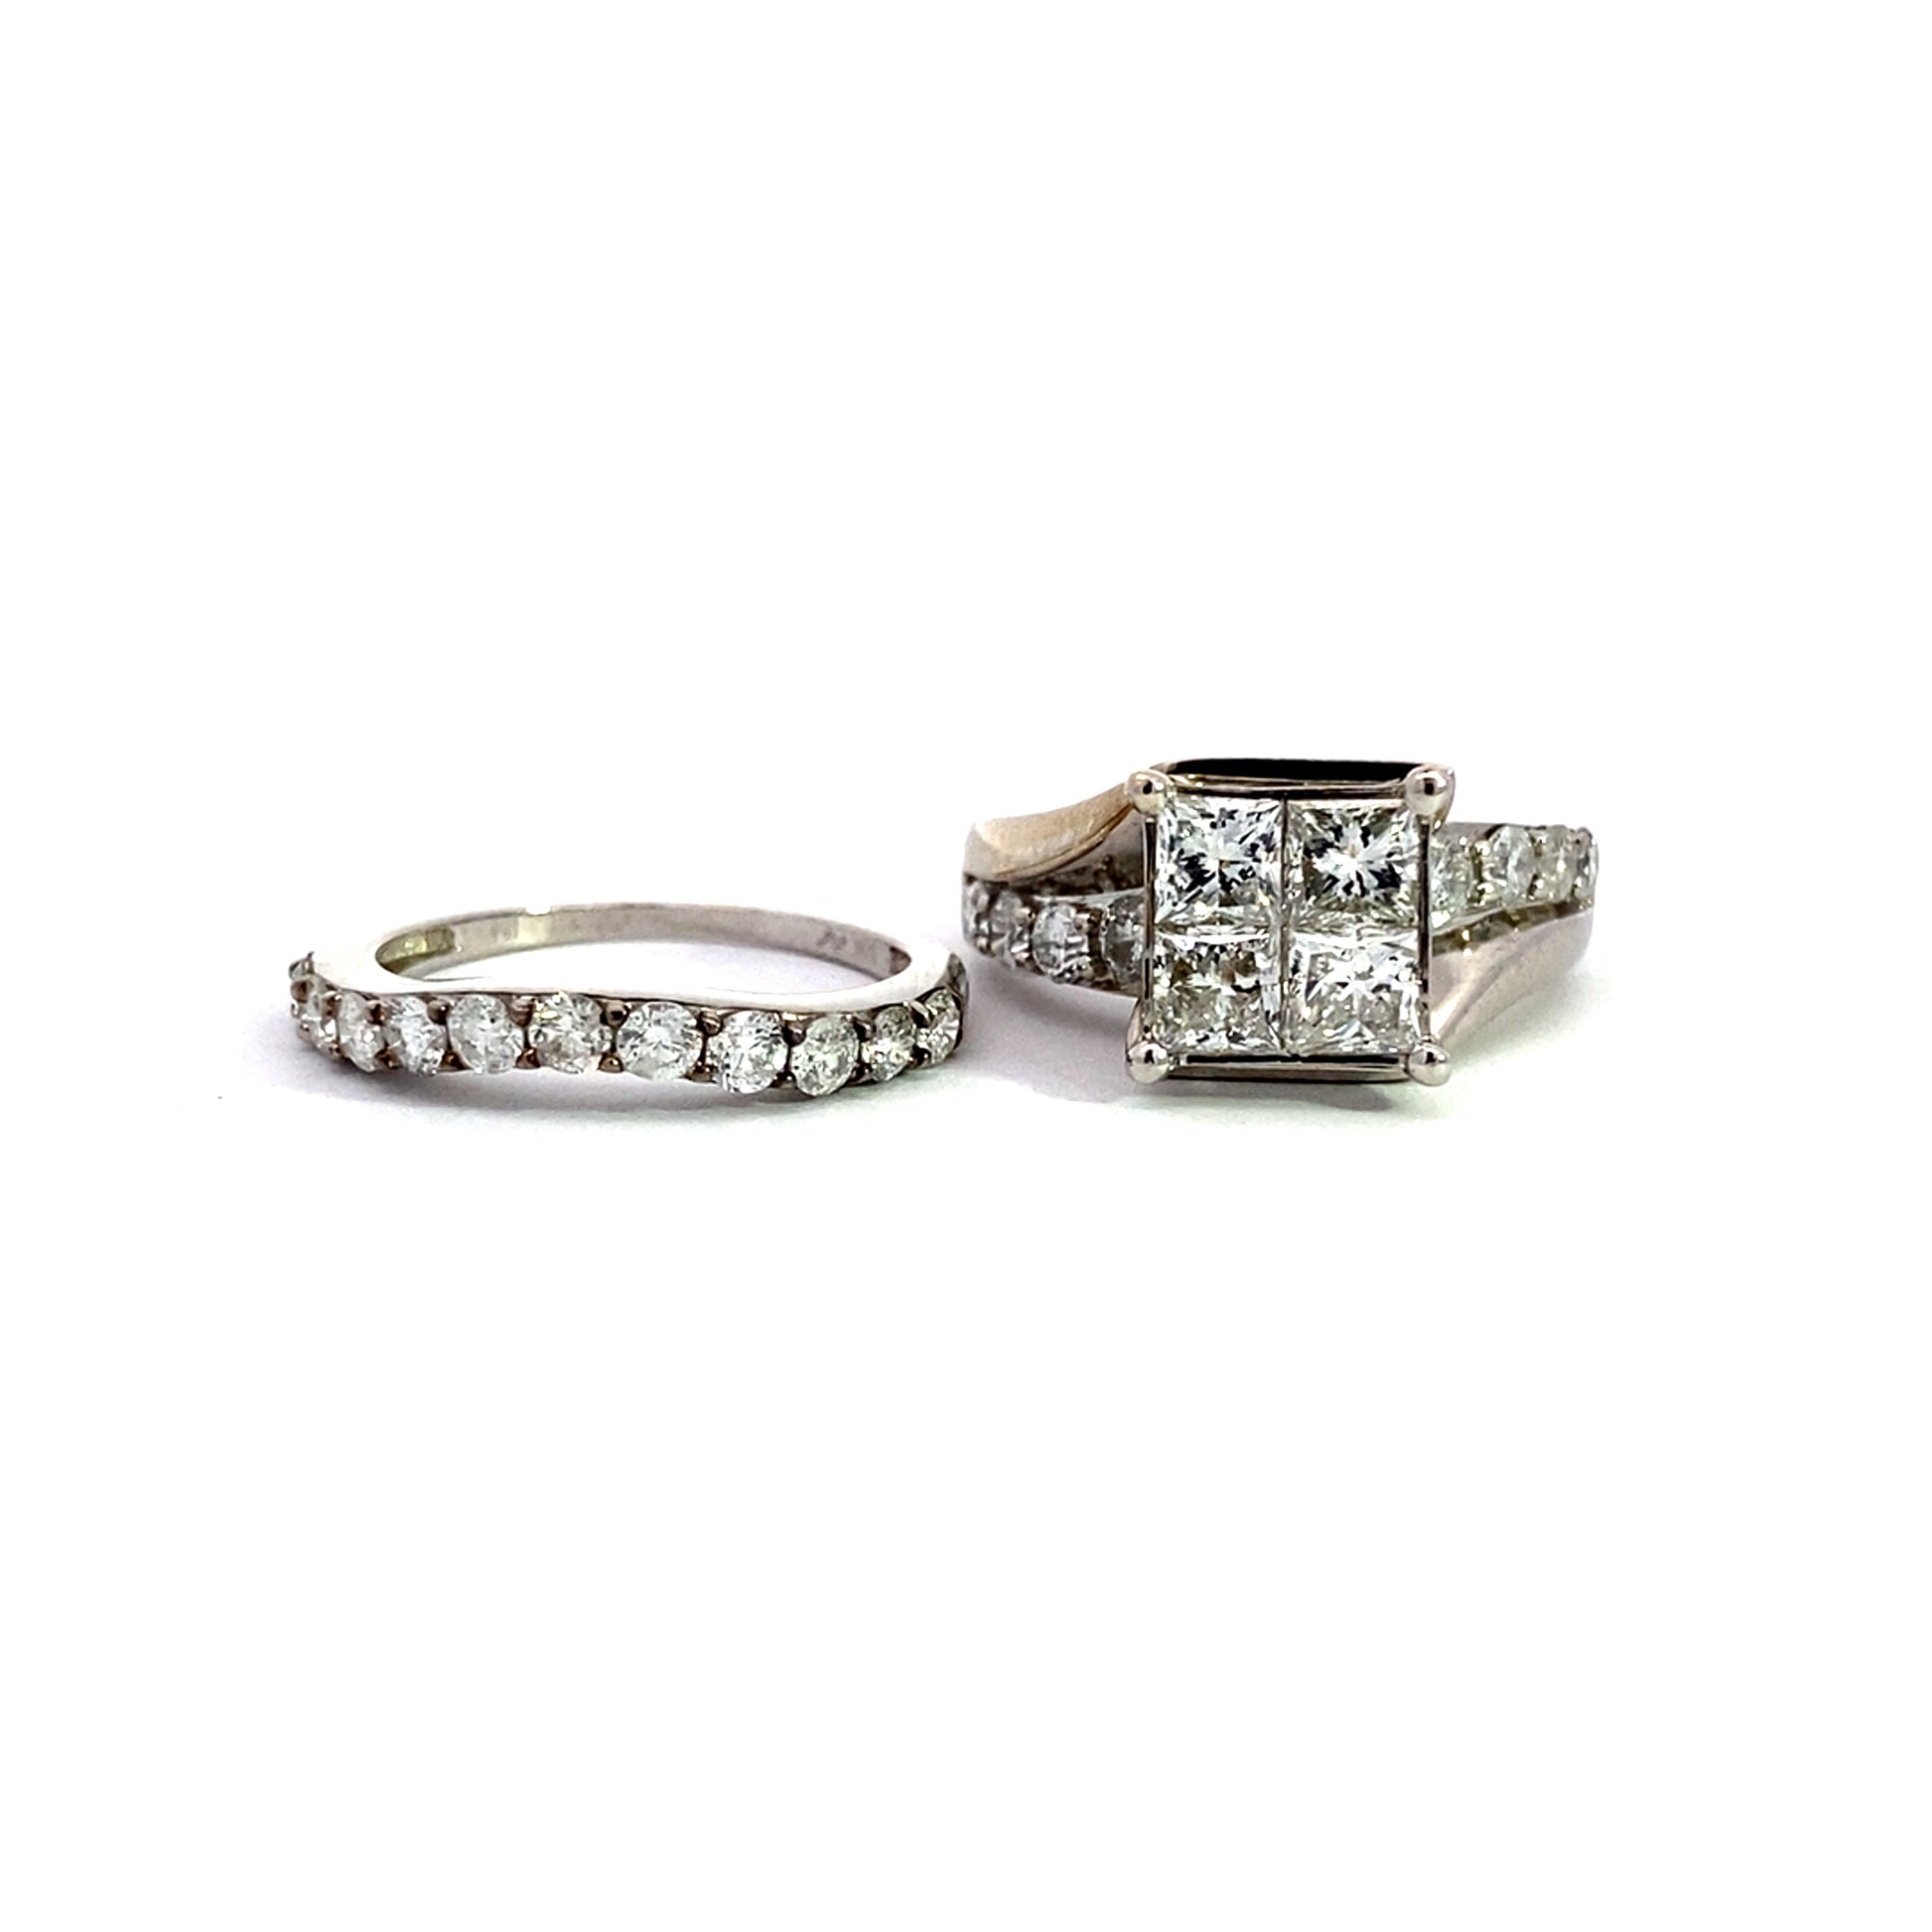 14K White Gold Diamond Wedding Ring Set Size 7.5 6.7Dwt